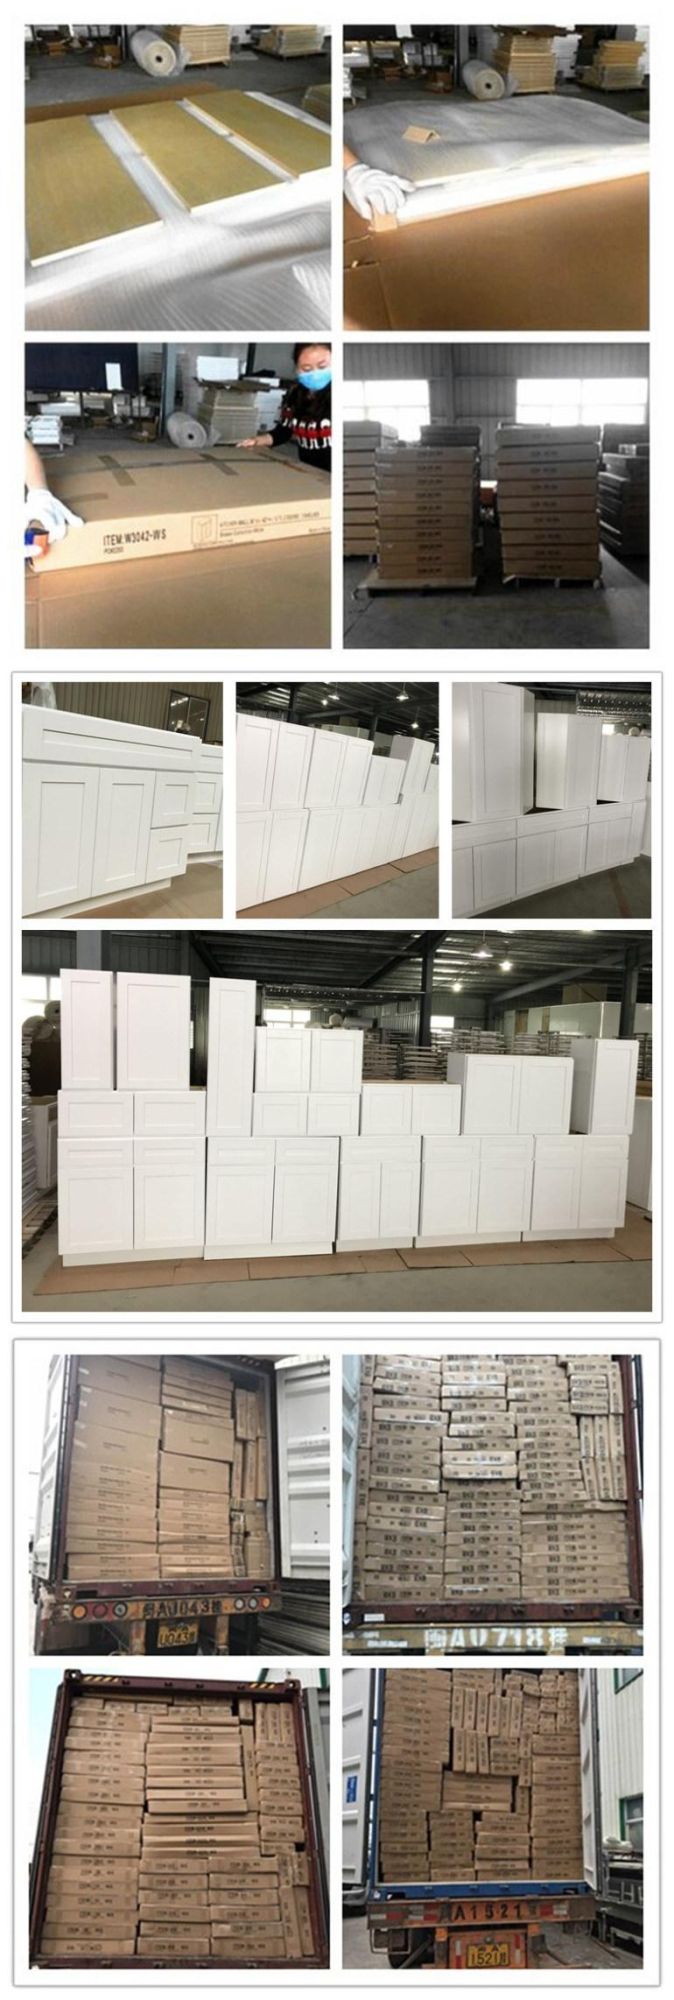 Fuzhou Swinging Door Design Kitchen Storage Cabinet for Sale